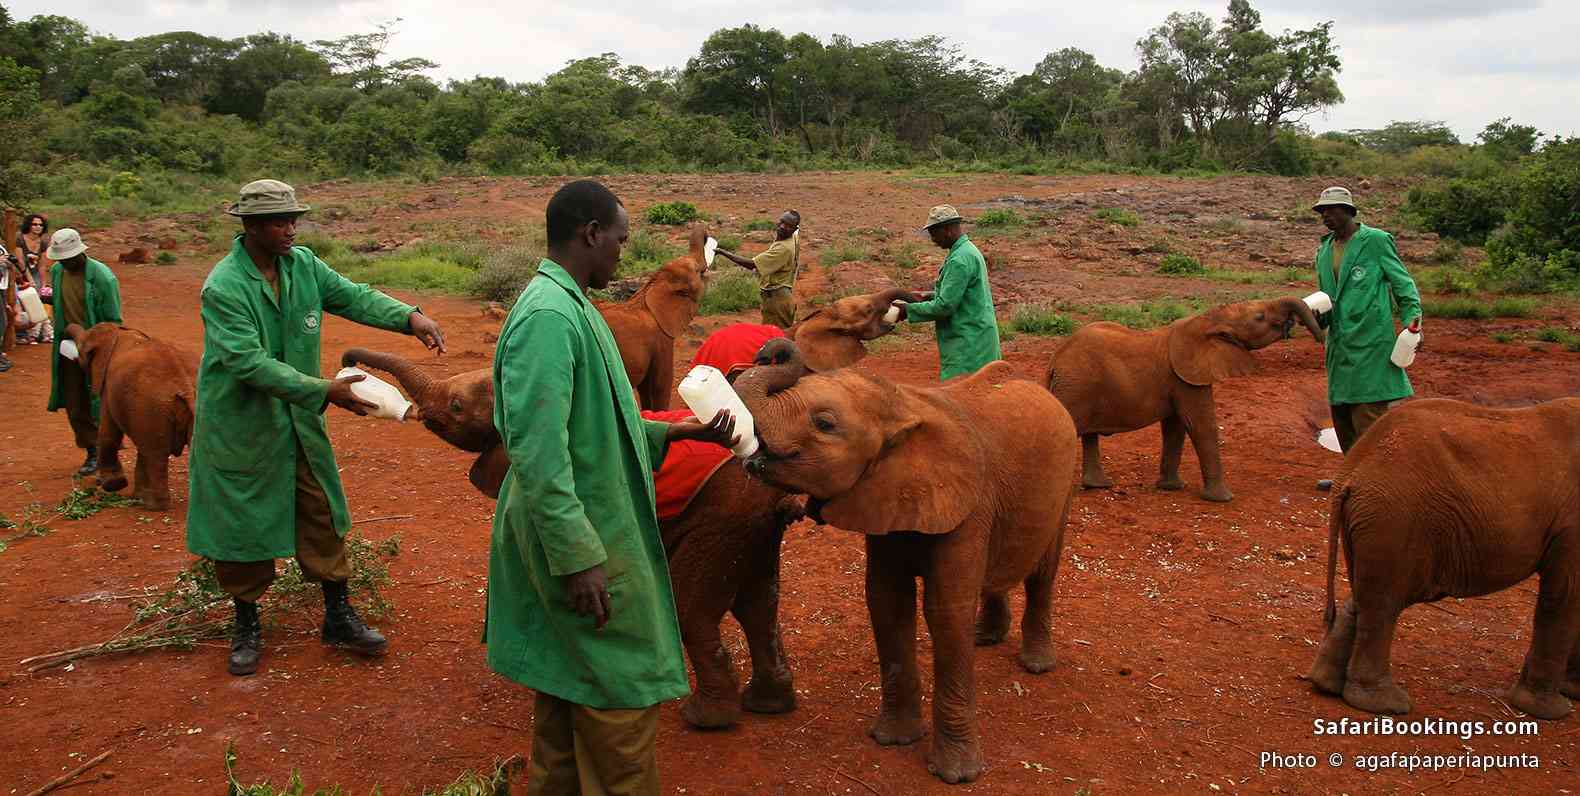 Workers feeding orphan elephants